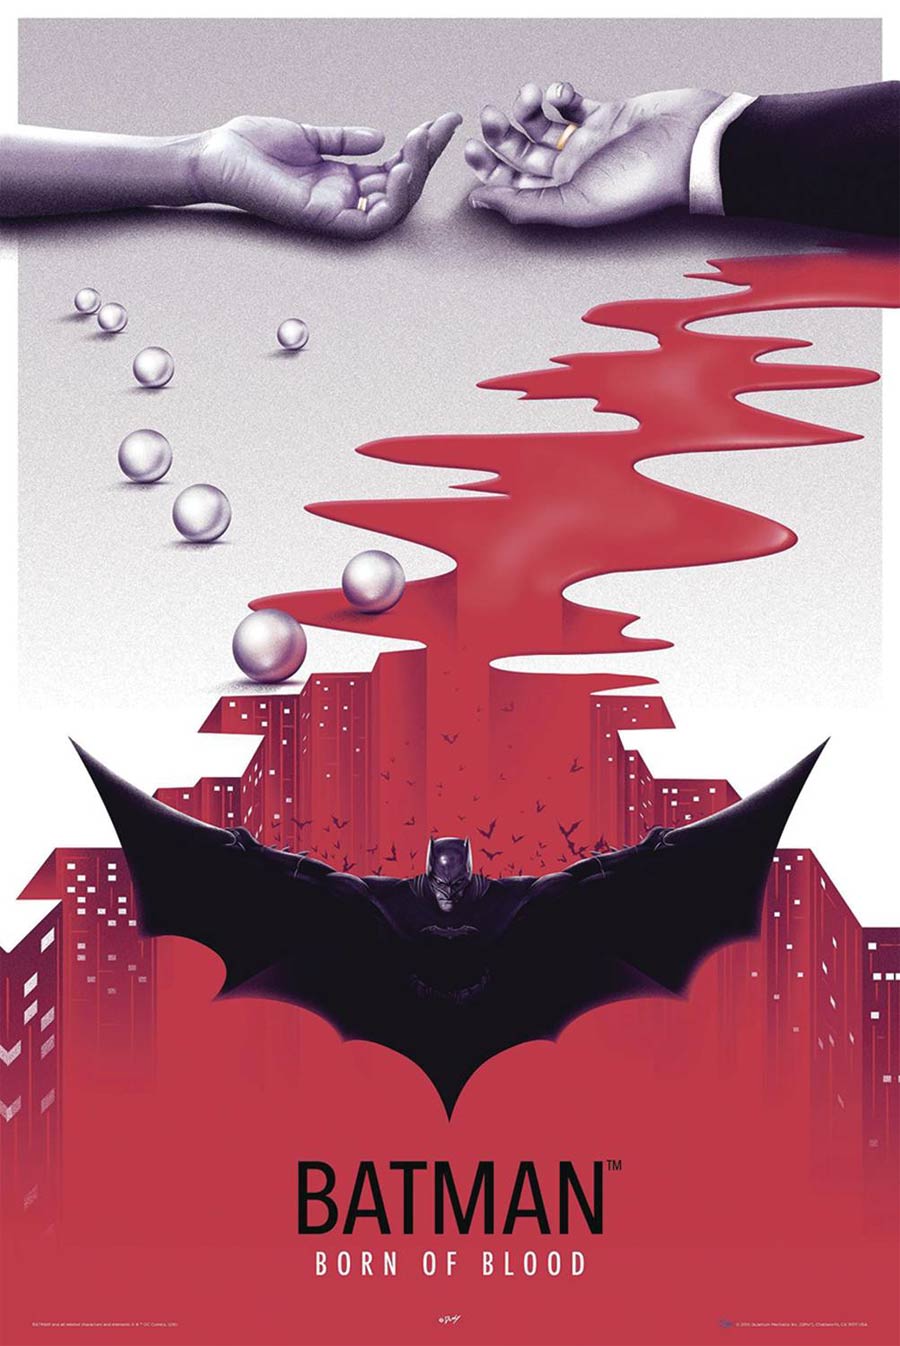 Batman Born Of Blood Art Print Poster